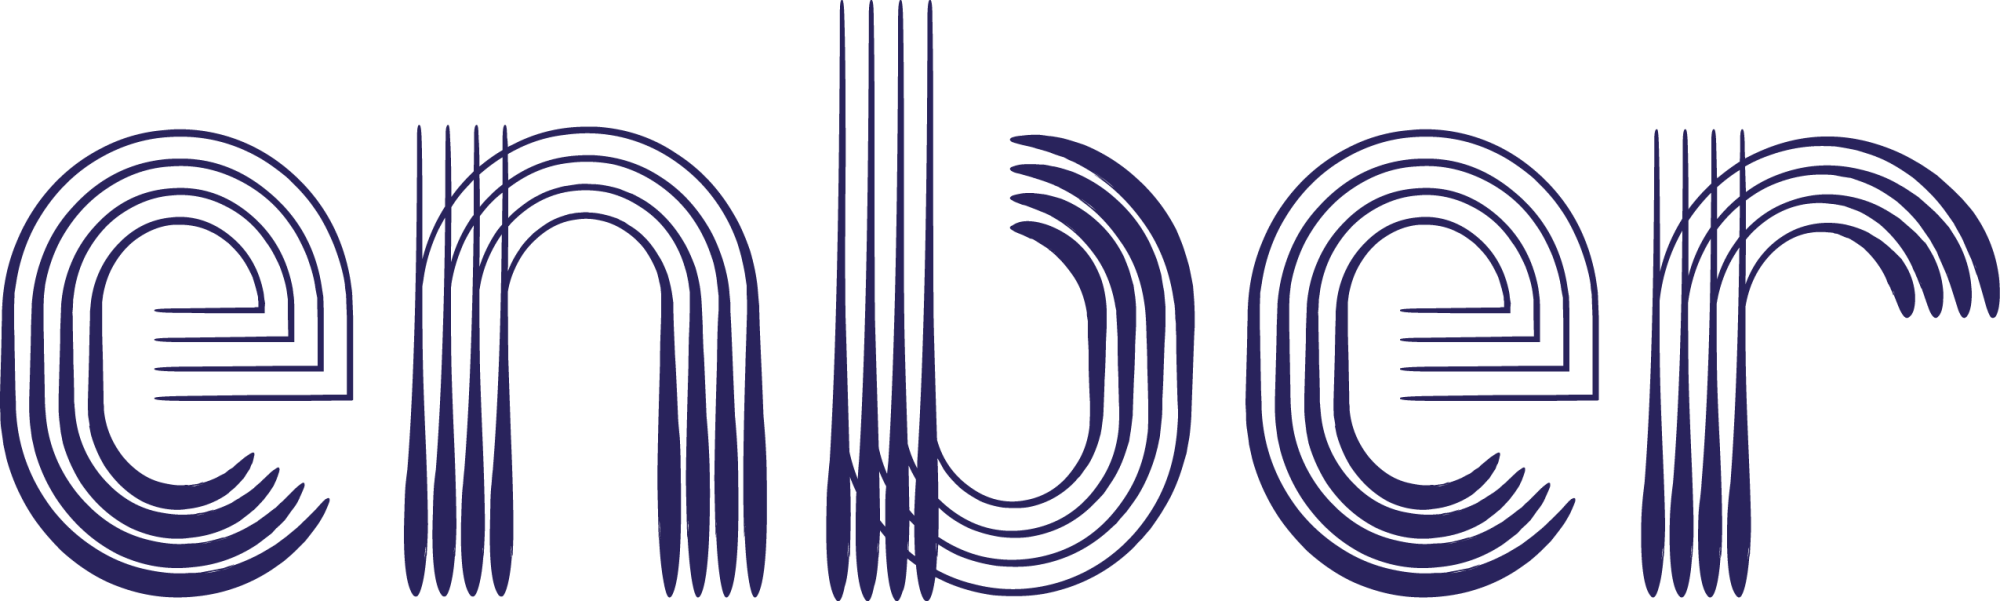 Enber logo in blauwe strepen letters